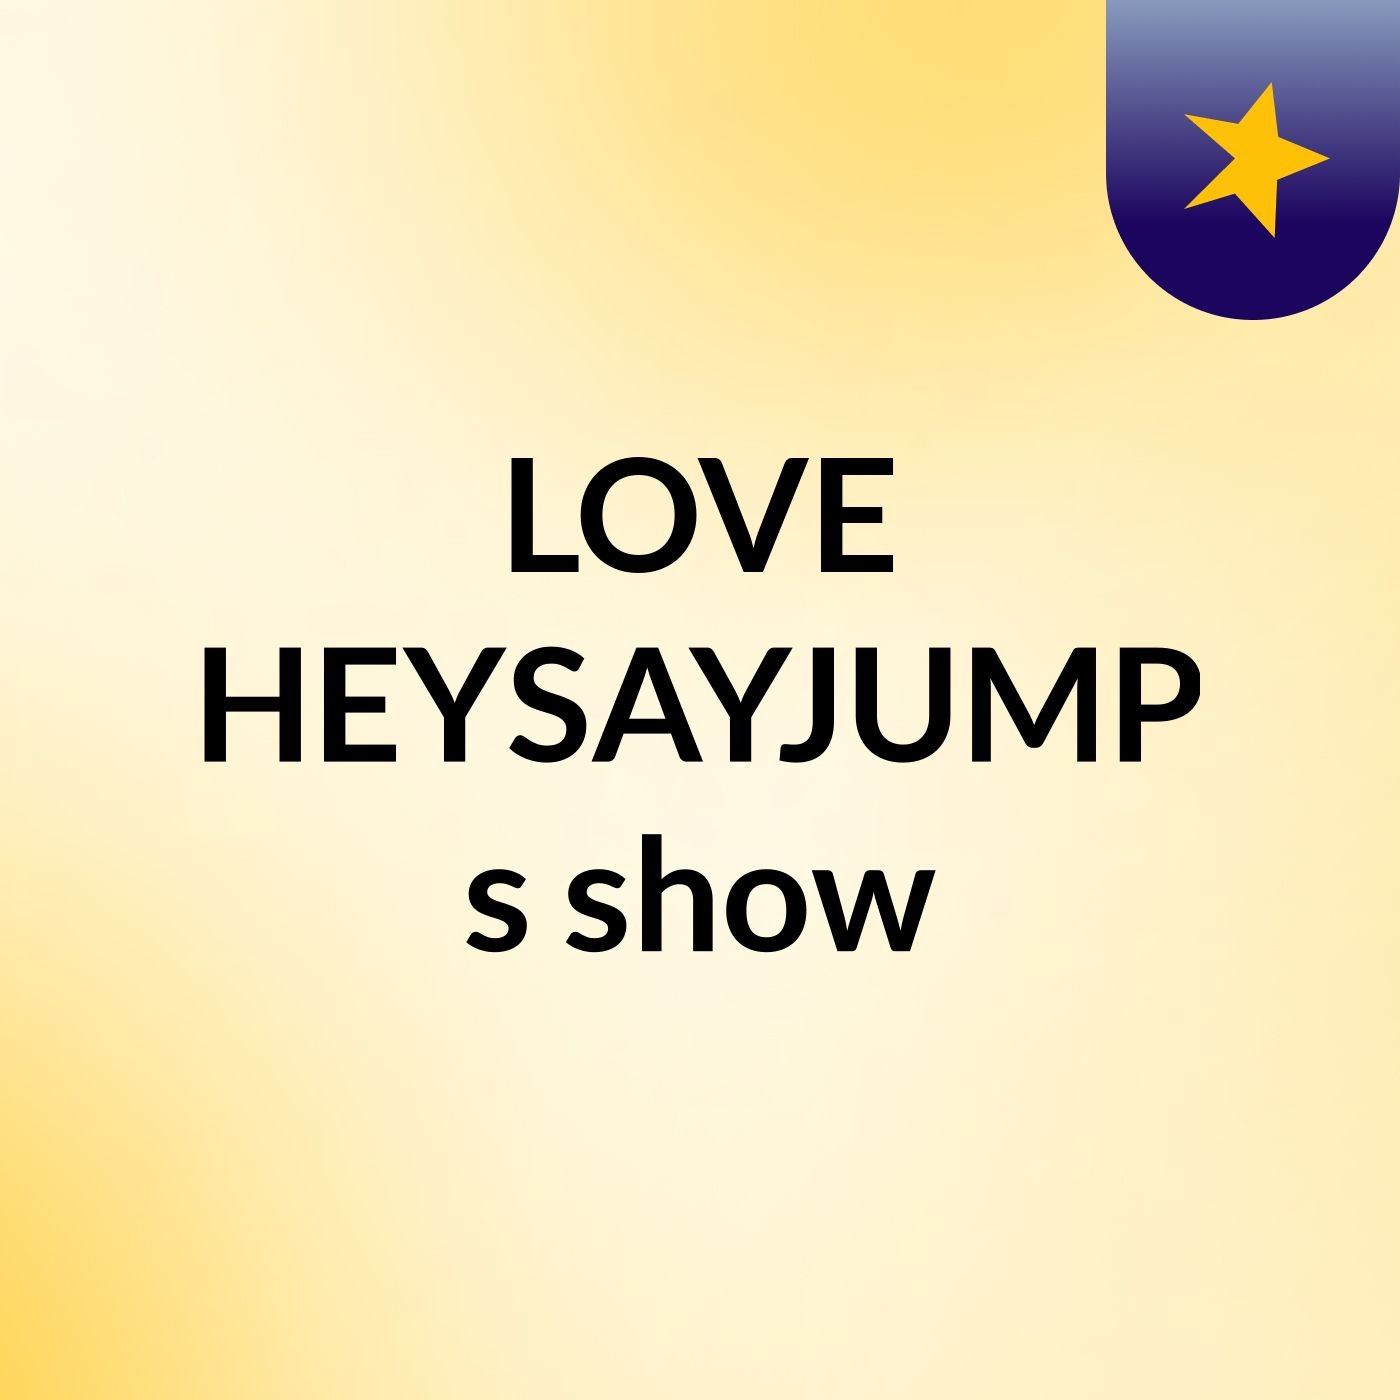 LOVE HEYSAYJUMP's show